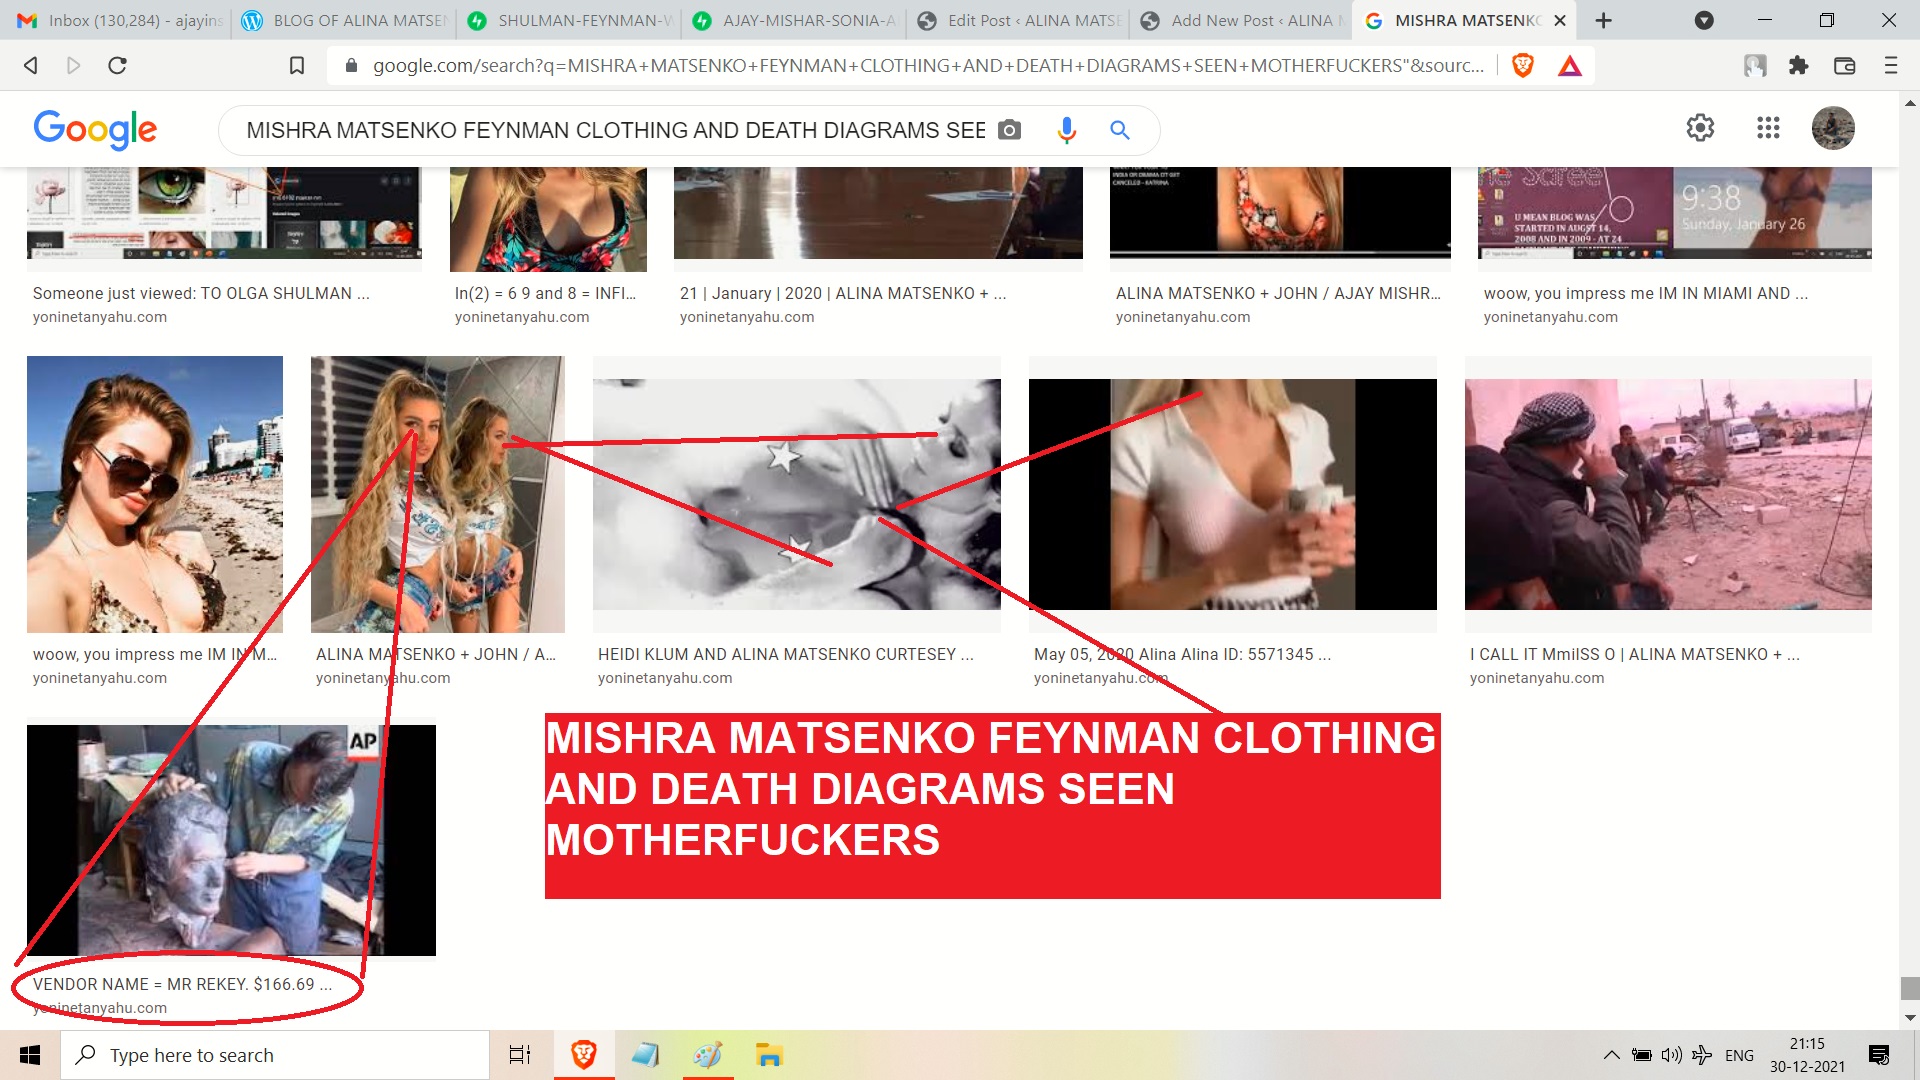 MISHRA MATSENKO FEYNMAN CLOTHING AND DEATH DIAGRAMS SEEN MOTHERFUCKERS --